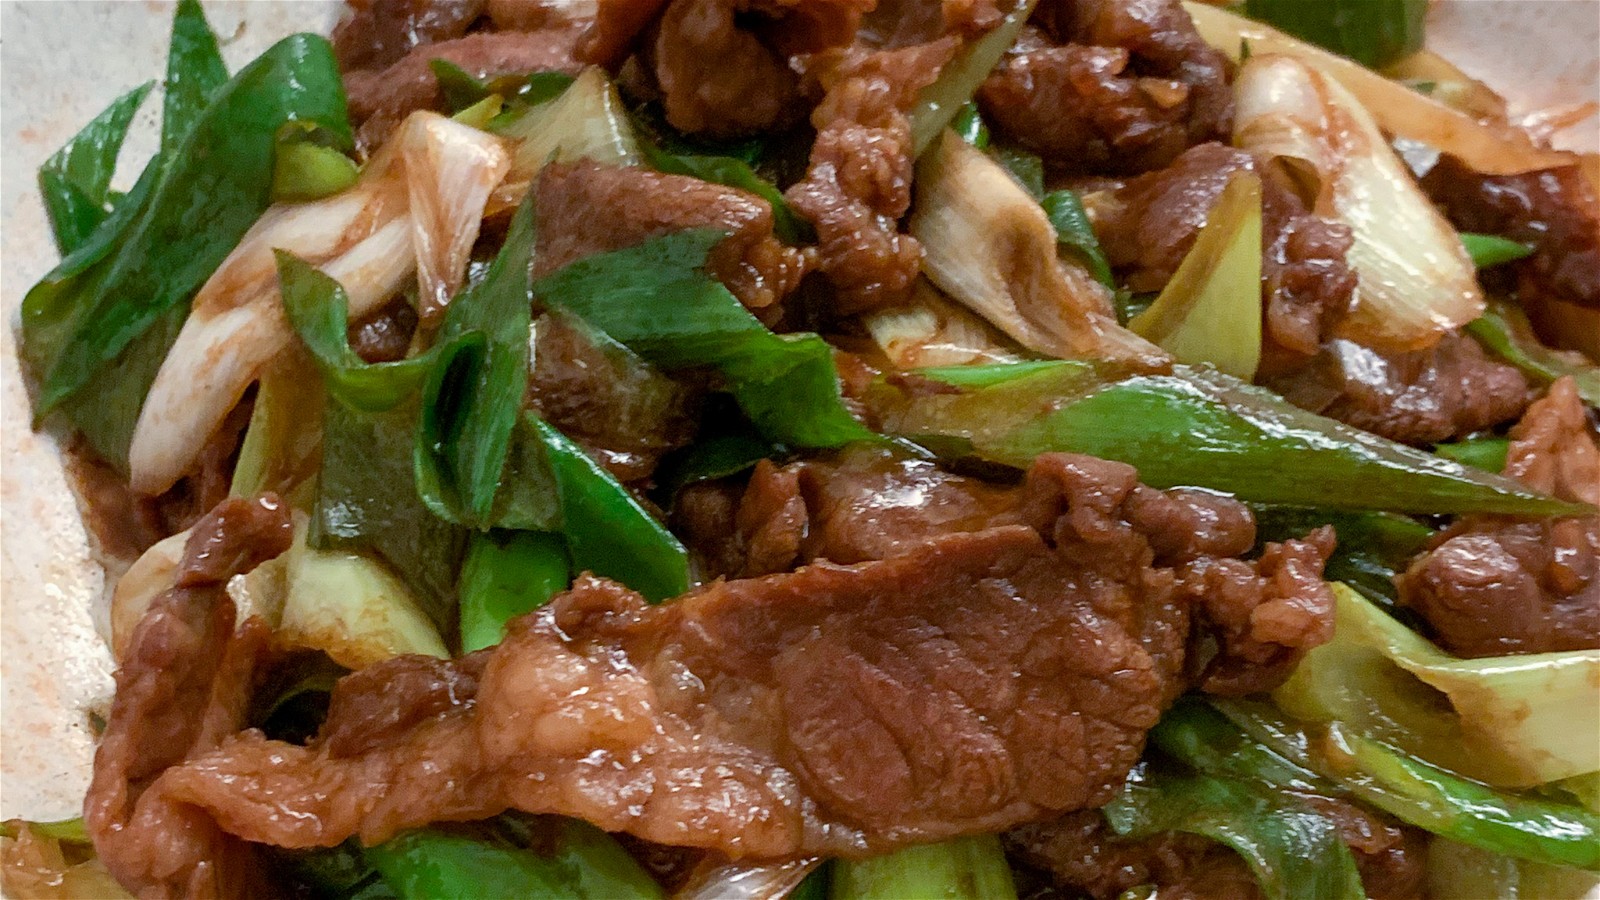 Image of Stir fried leek and beef / lamb (蔥爆牛肉 / 蔥爆羊肉)